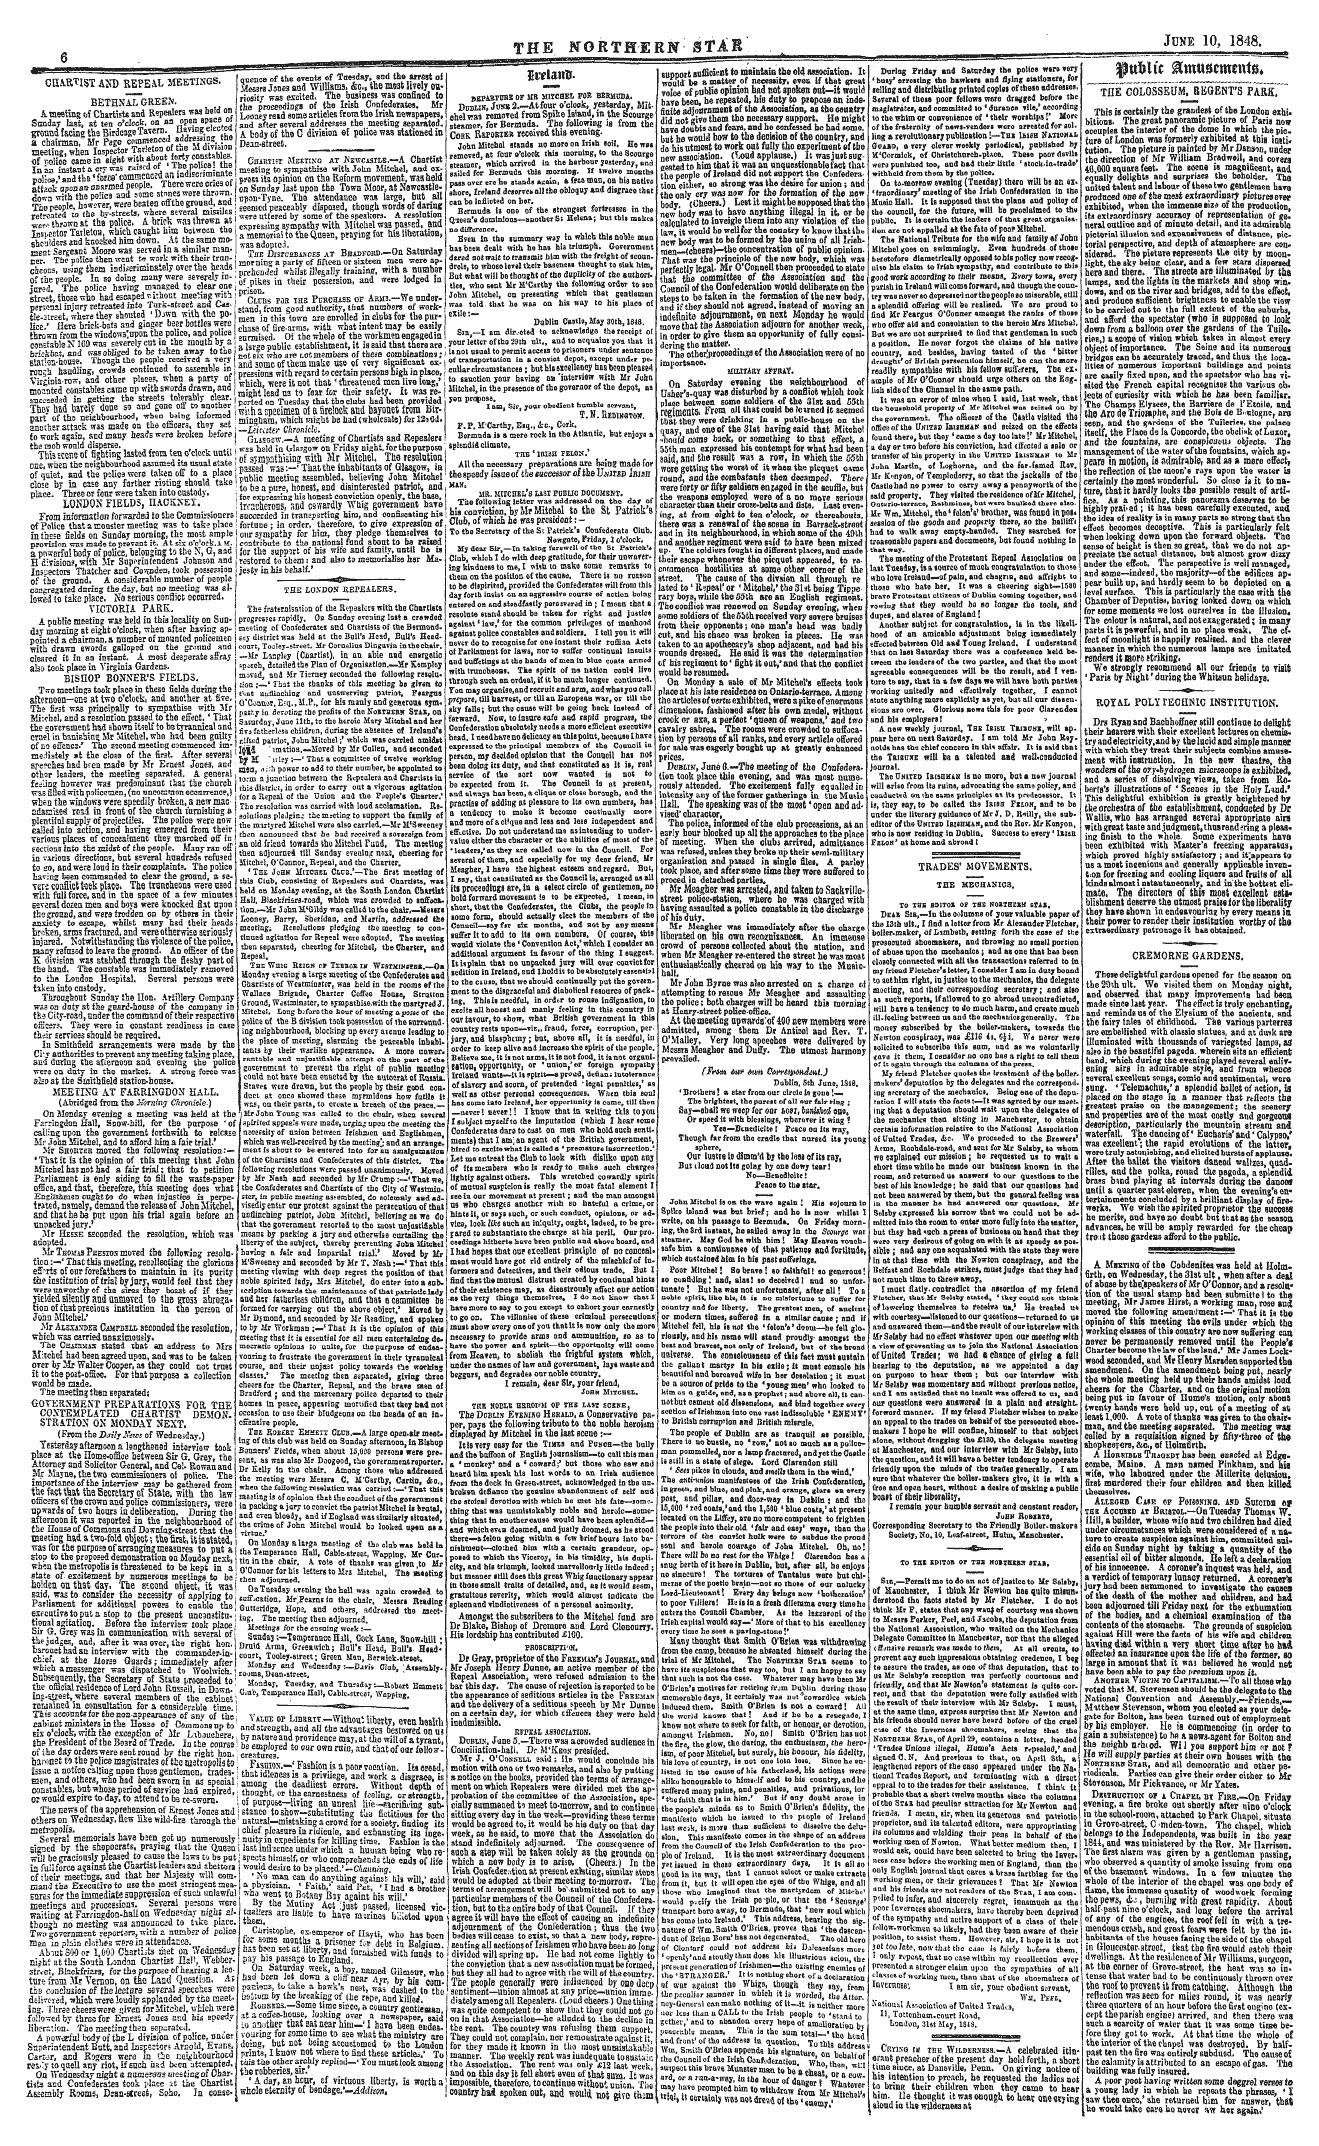 Northern Star (1837-1852): jS F Y, 3rd edition - It'rf&Lto